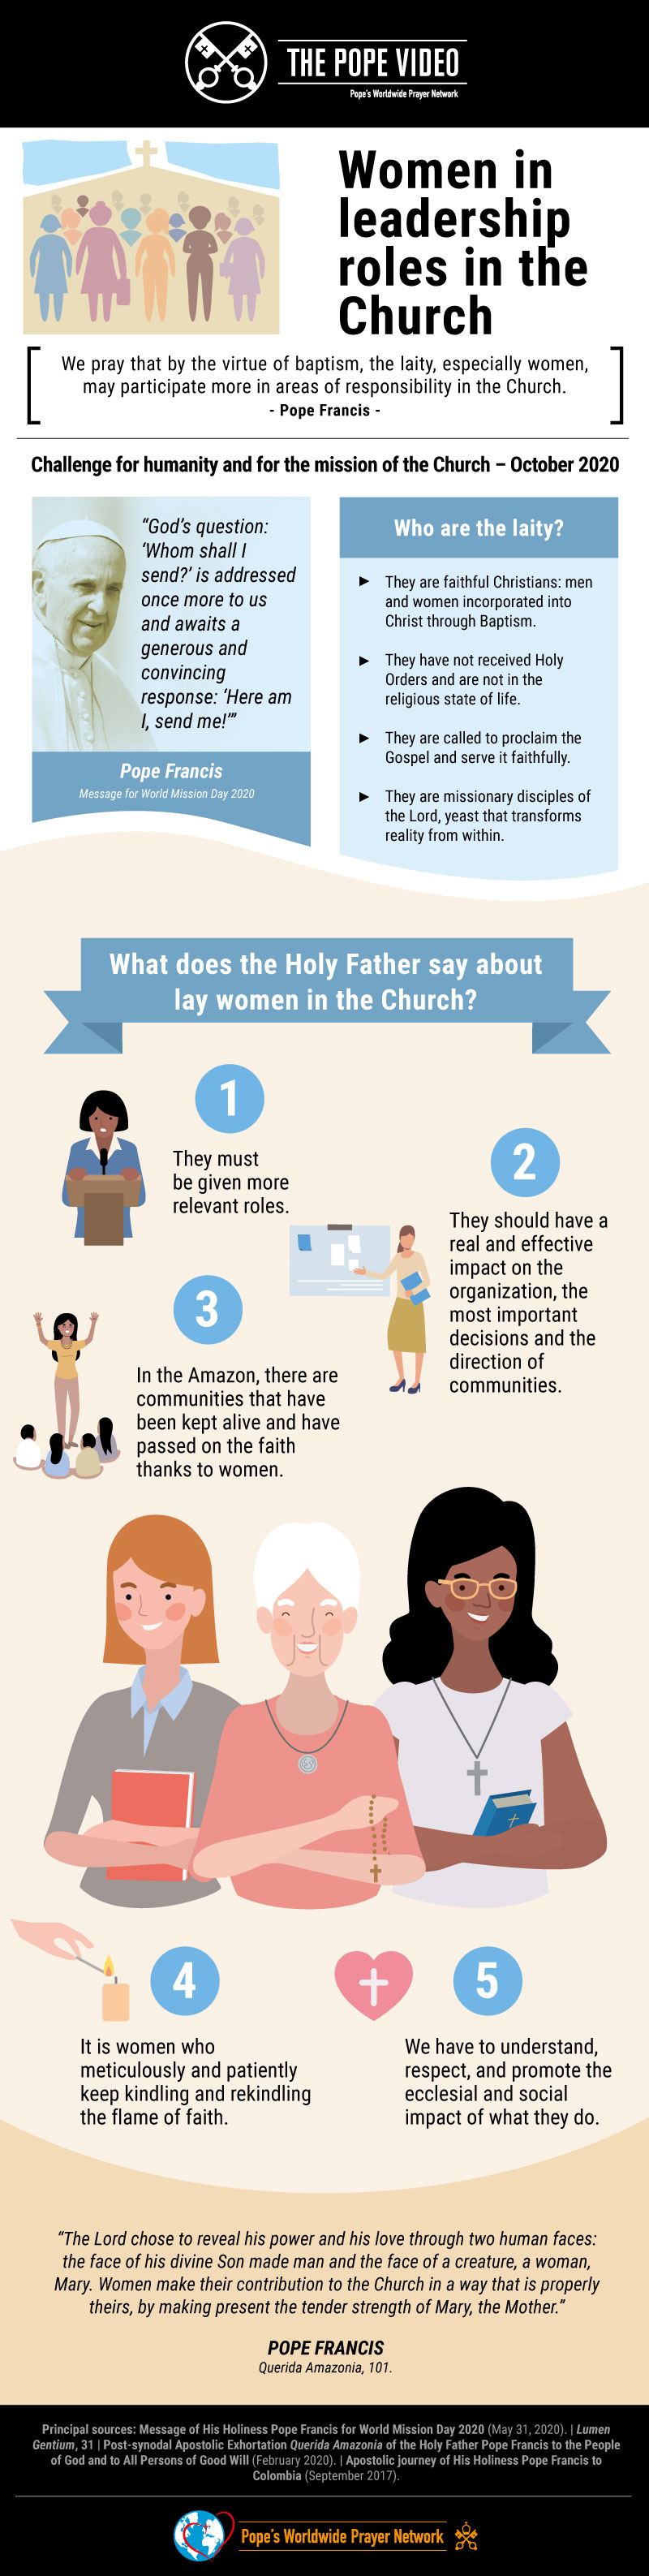 Infografia-TPV-10-2020-EN-The-Pope-Video-Women-in-leadership-roles-in-the-Church.jpg